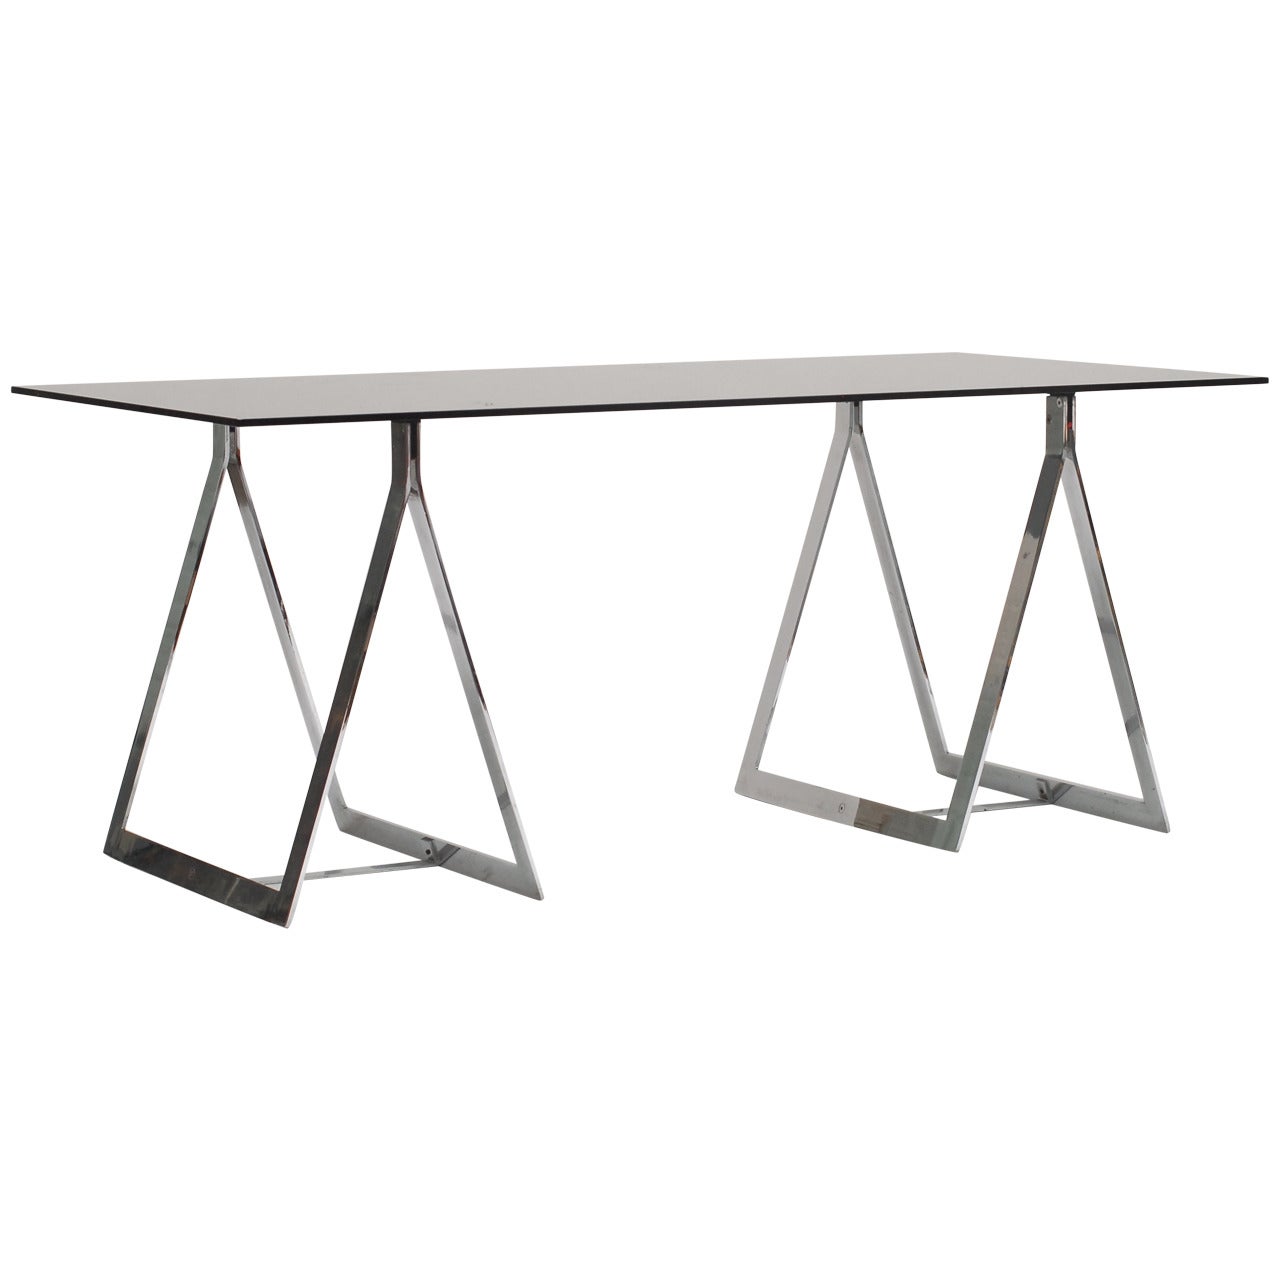 1960's Belgian Atelier sawhorse desk table